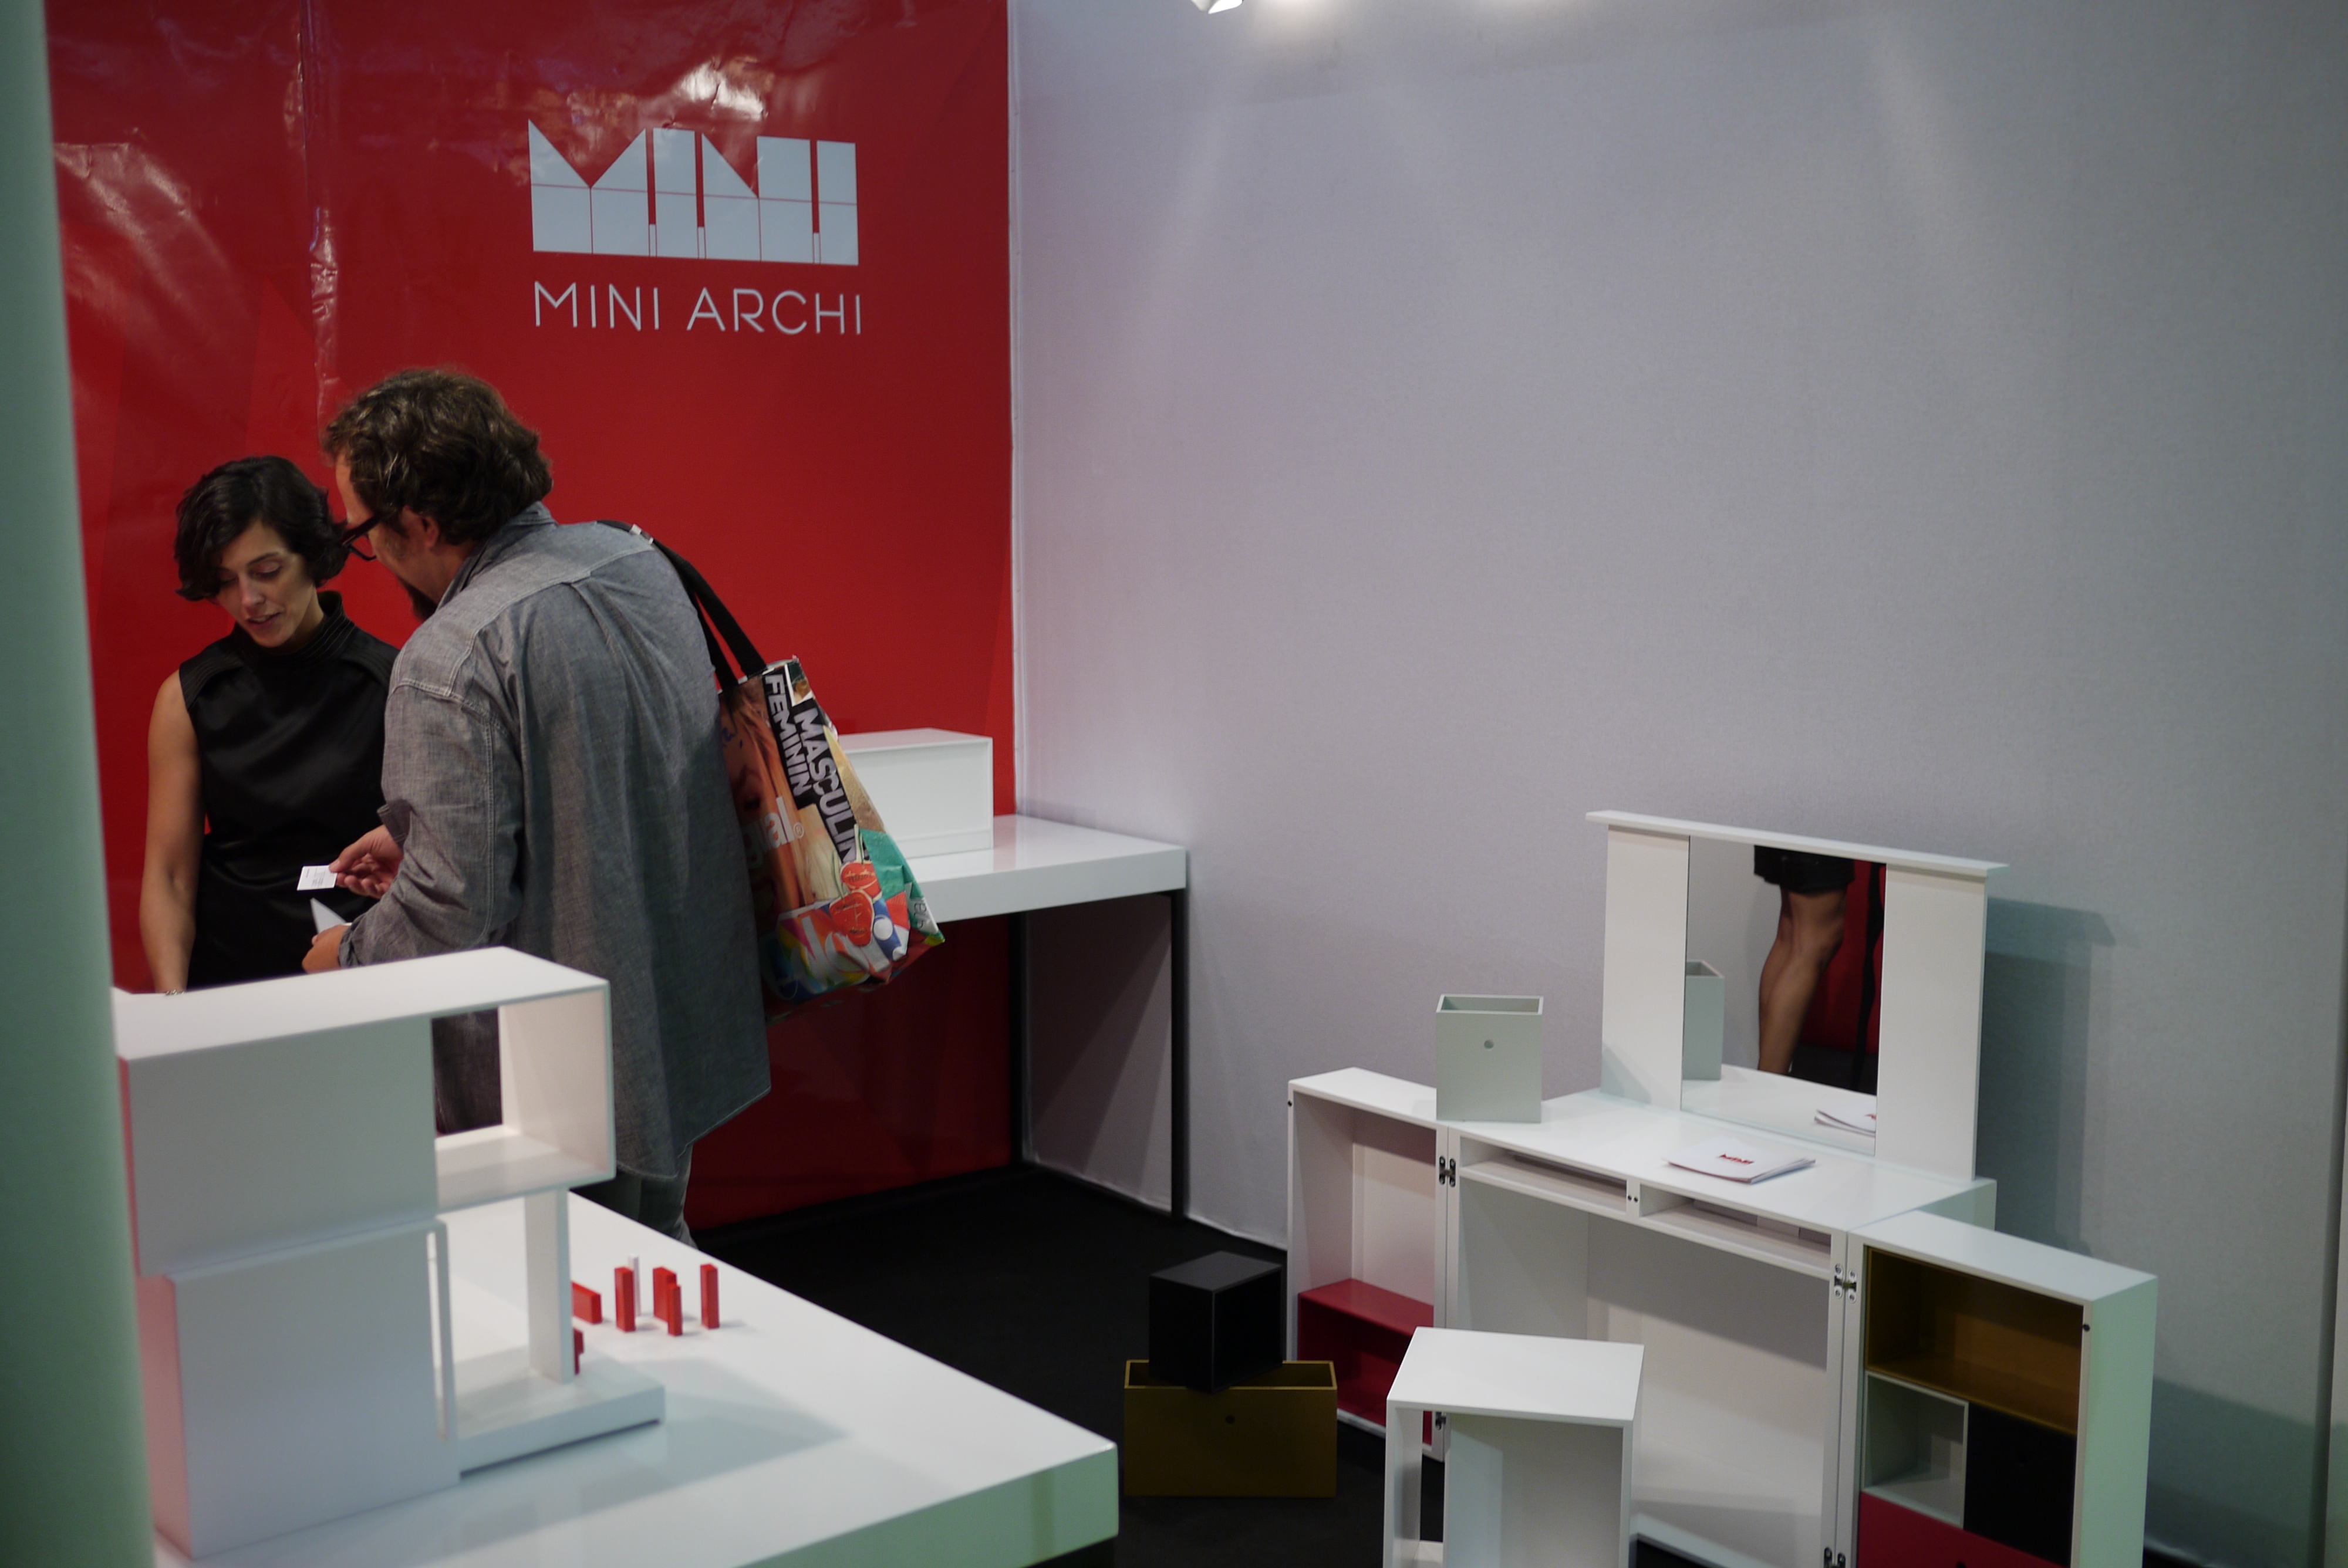 Mini Archi at Maison & Objet